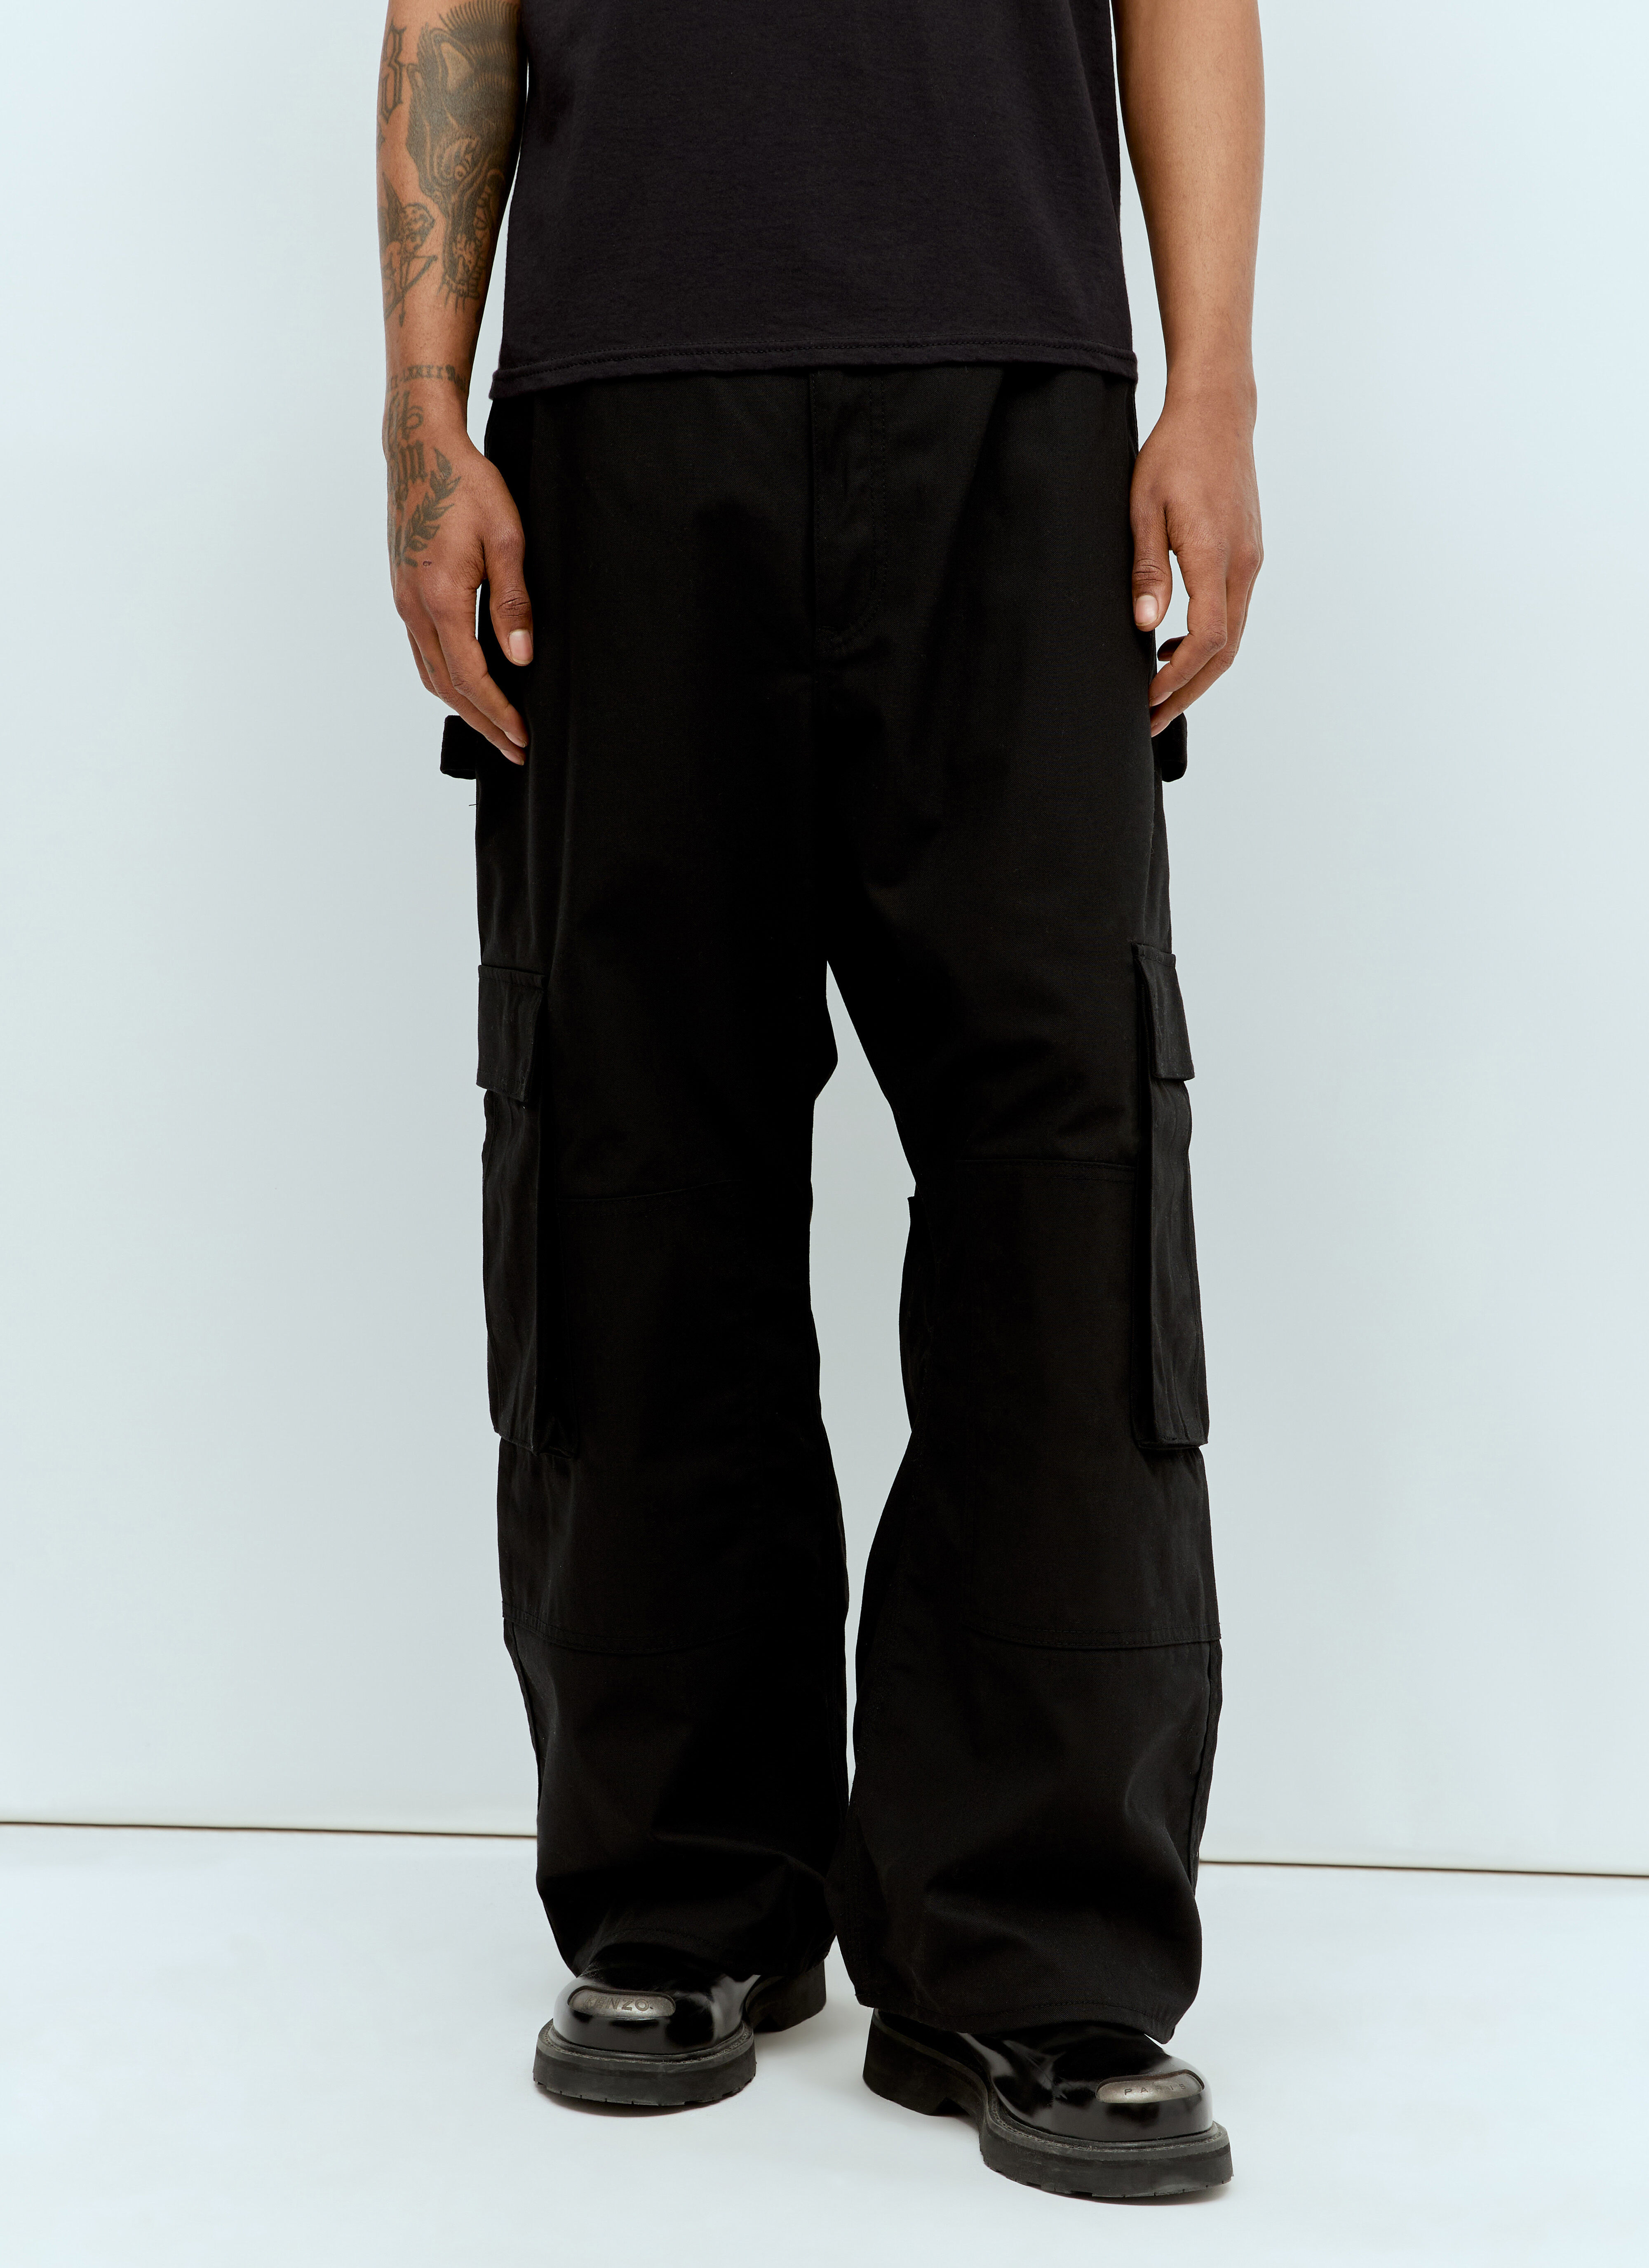 Jean Paul Gaultier x Carharrt 工装裤 Red jpg0157001